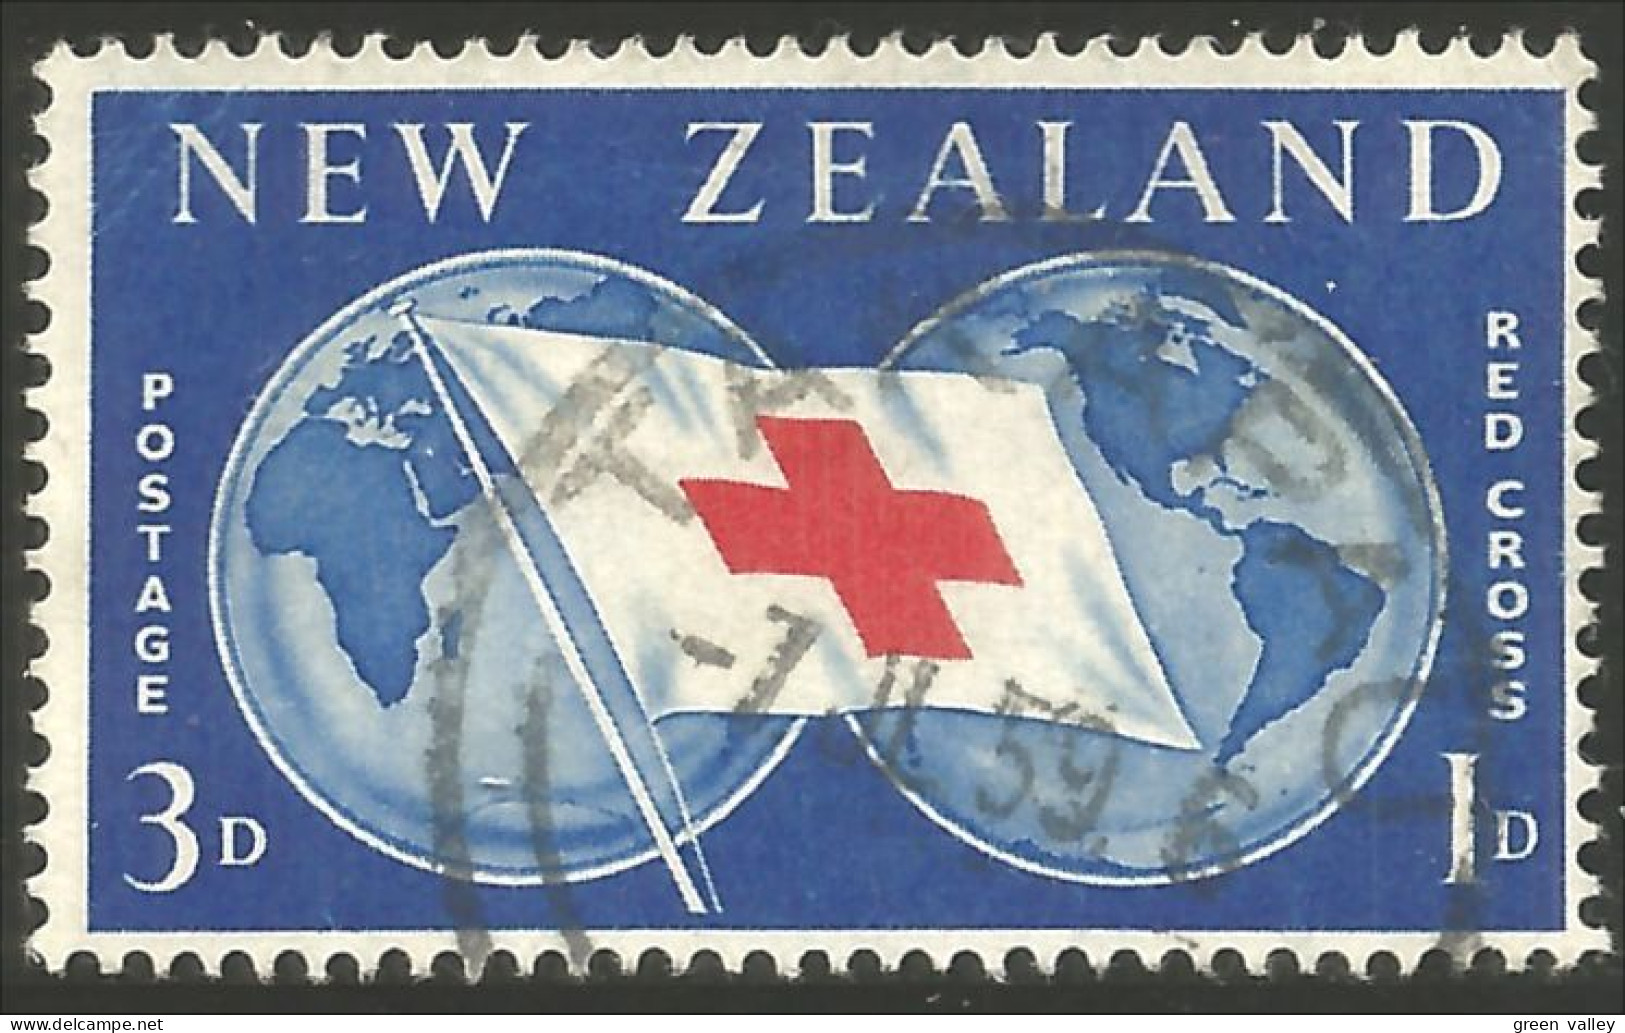 706 New Zealand Croix Rouge Red Cross Rotes Kreuz Drapeau Flag (NZ-28) - Medicine